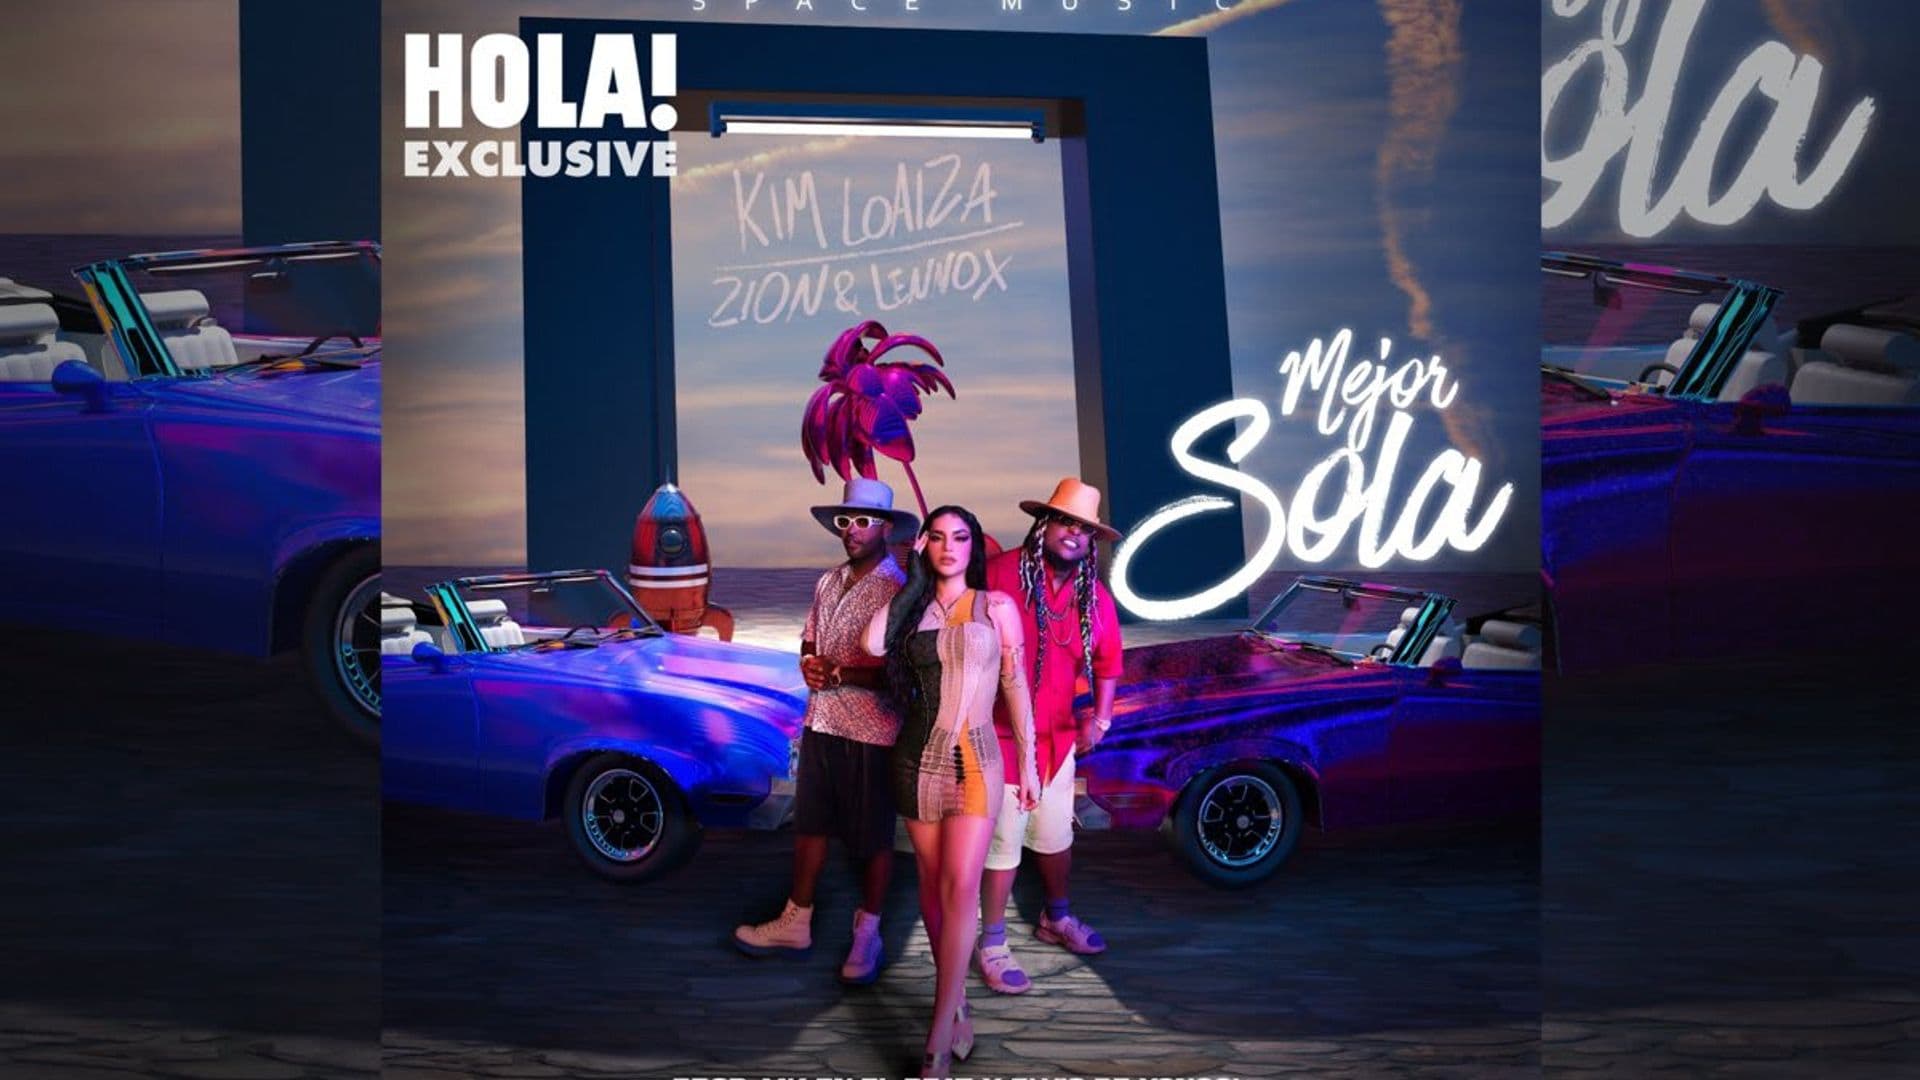 Kim Loaiza enlists legends Zion & Lennox for new self-love single ‘MEJOR SOLA’